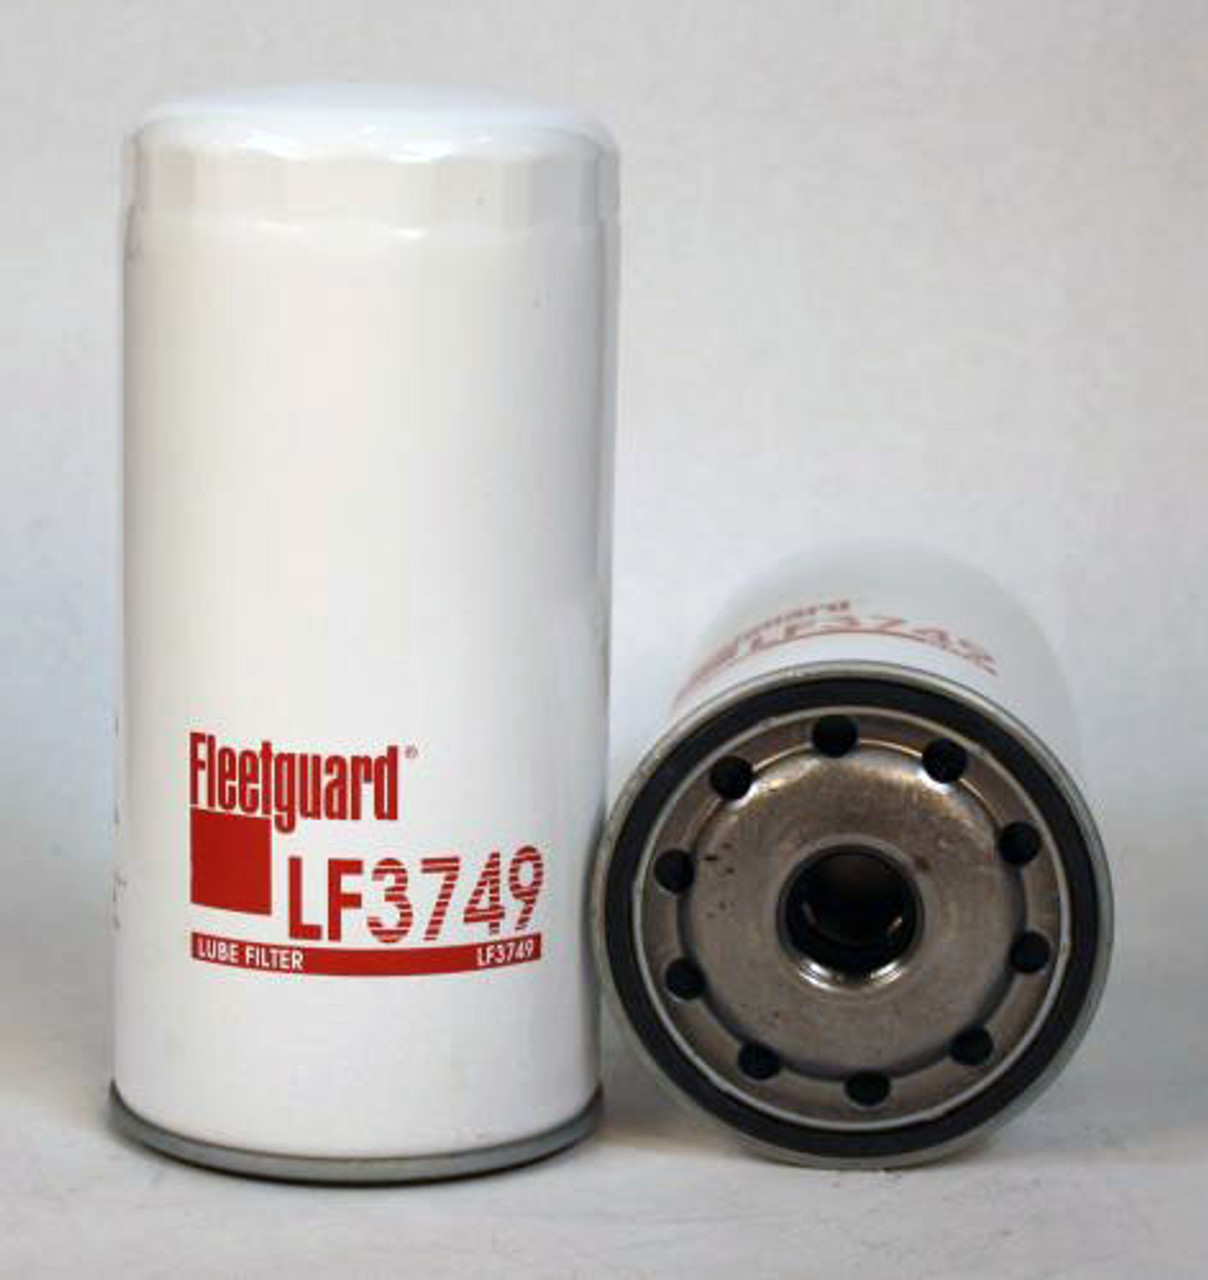 LF3749: Fleetguard Spin-On Oil Filter